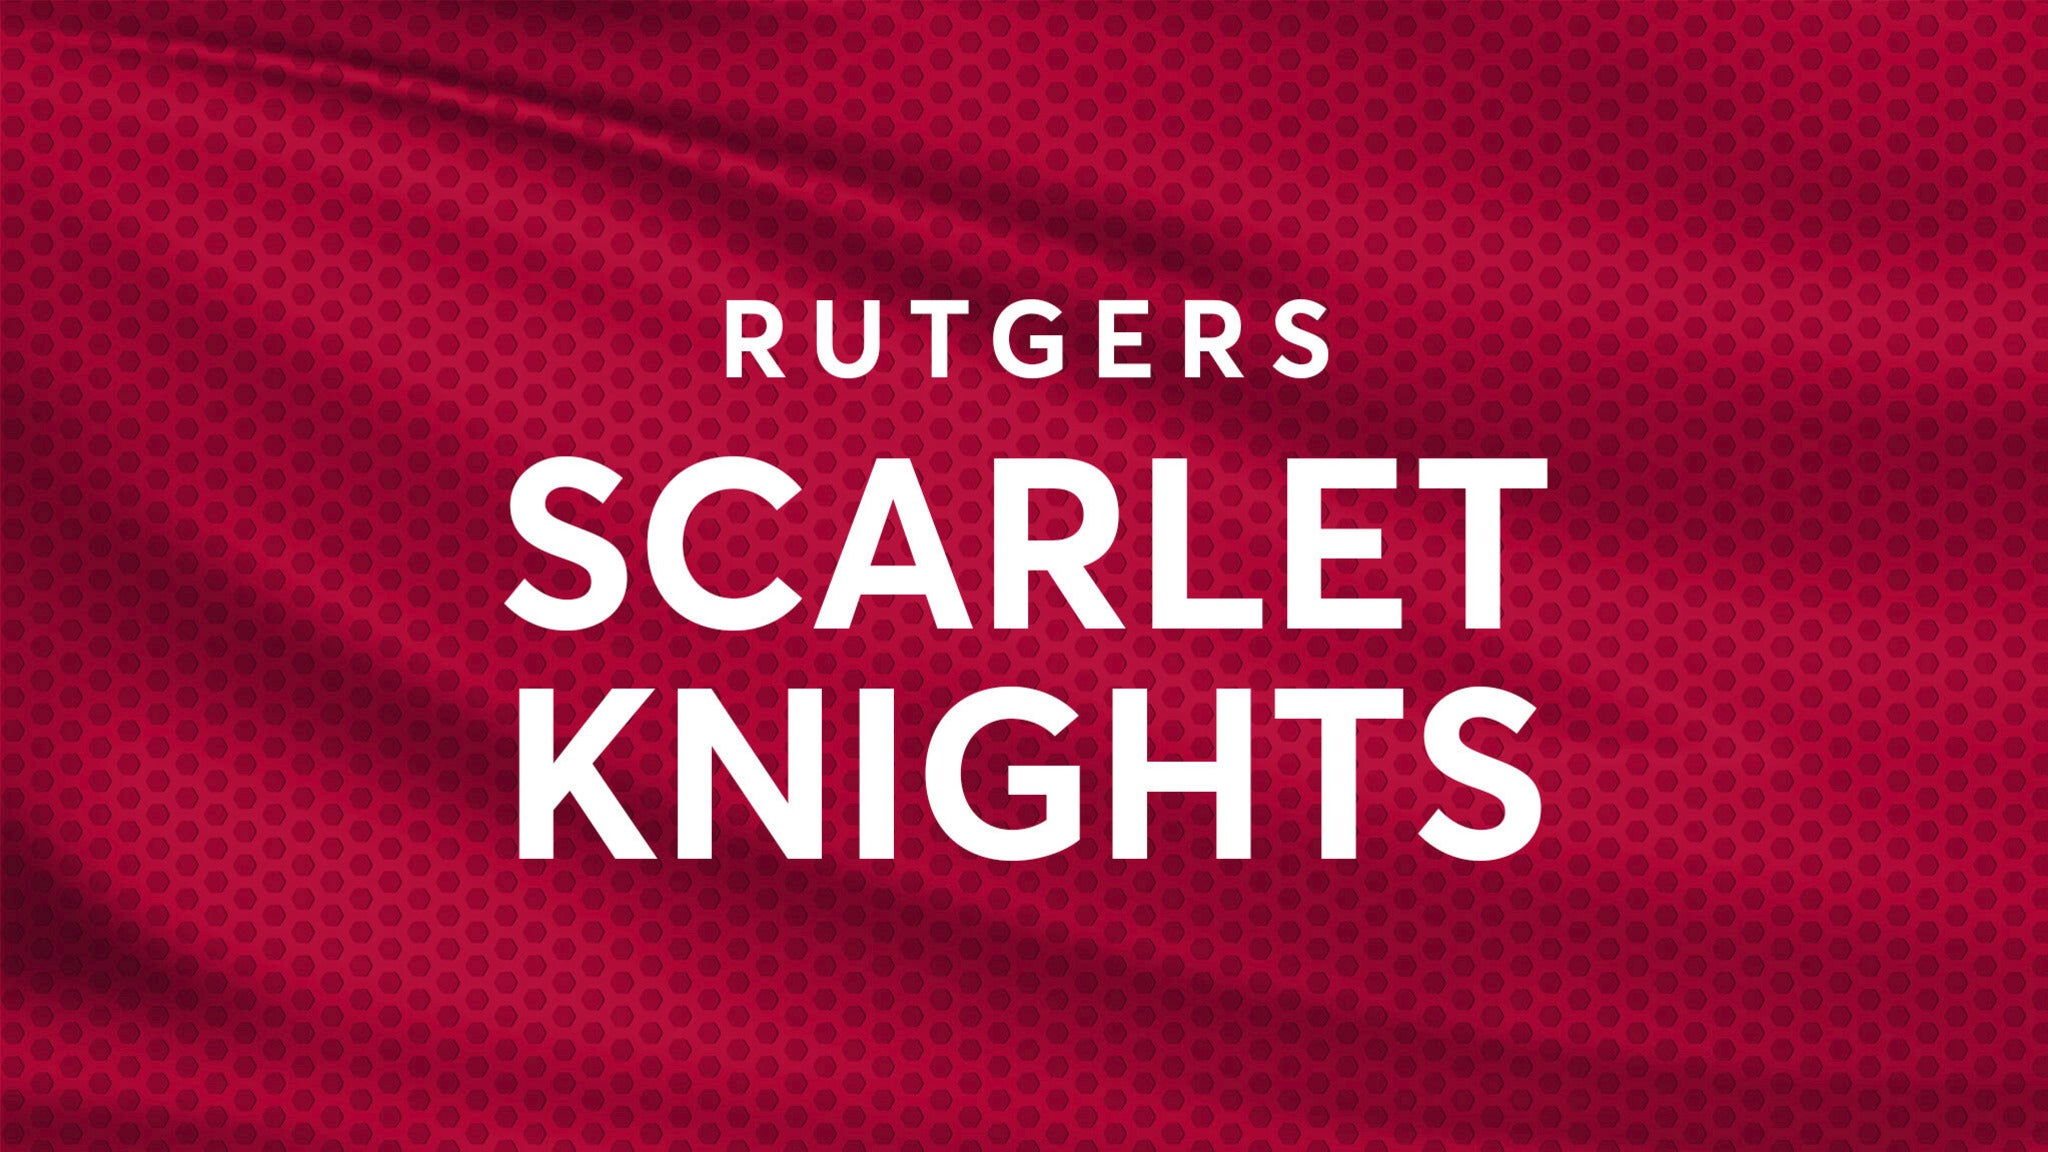 Rutgers Scarlet Knights Softball presale information on freepresalepasswords.com